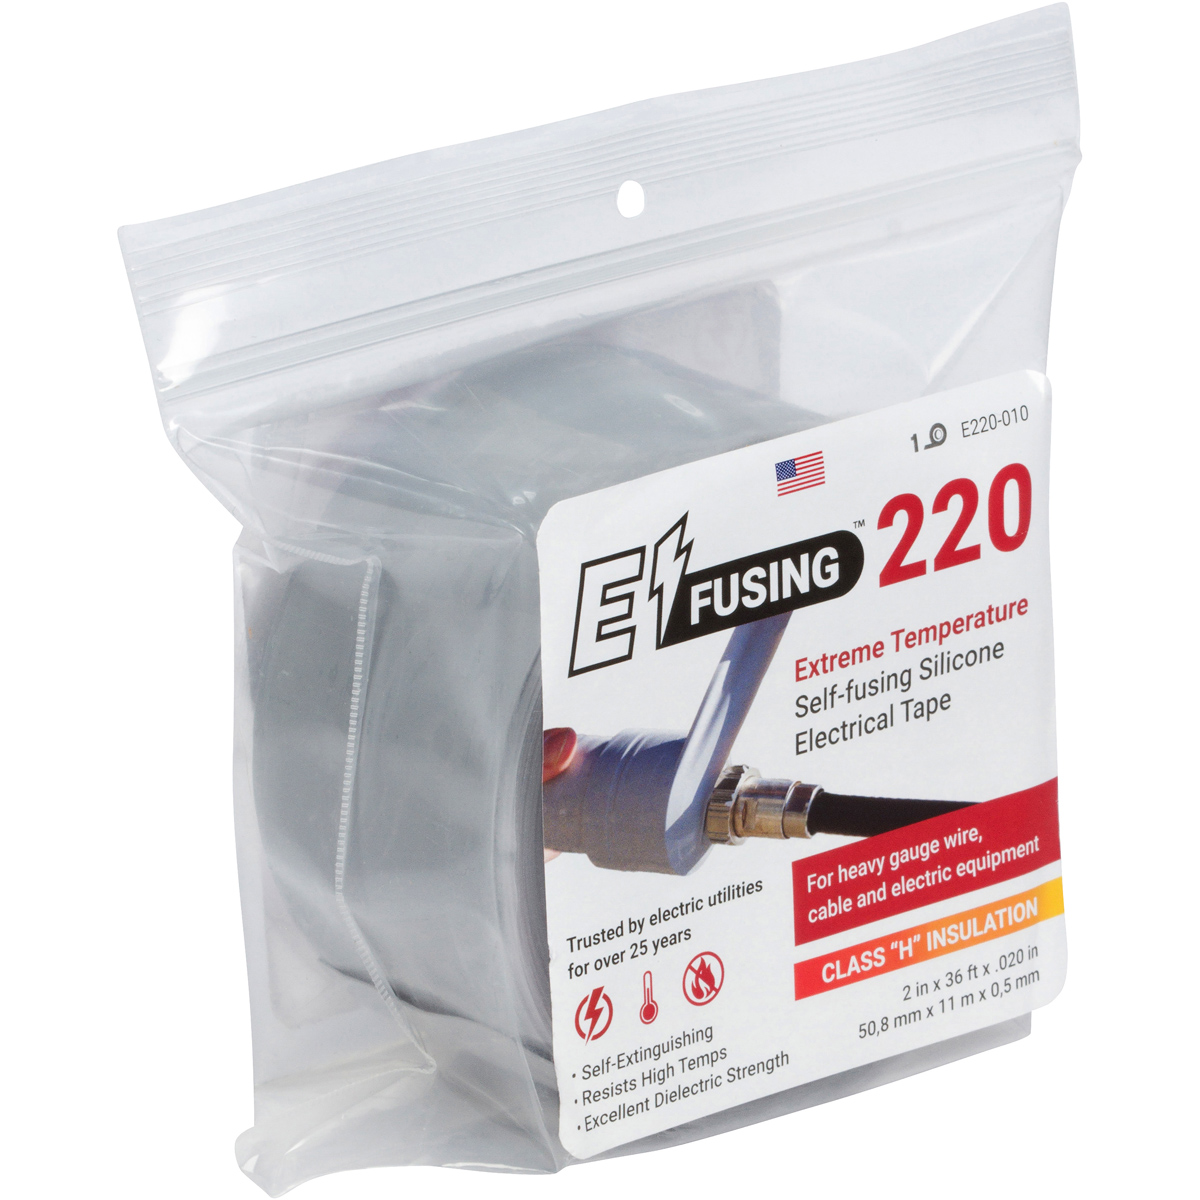 E/ Fusing 112 - Flame Resistant High Temperature Silicone